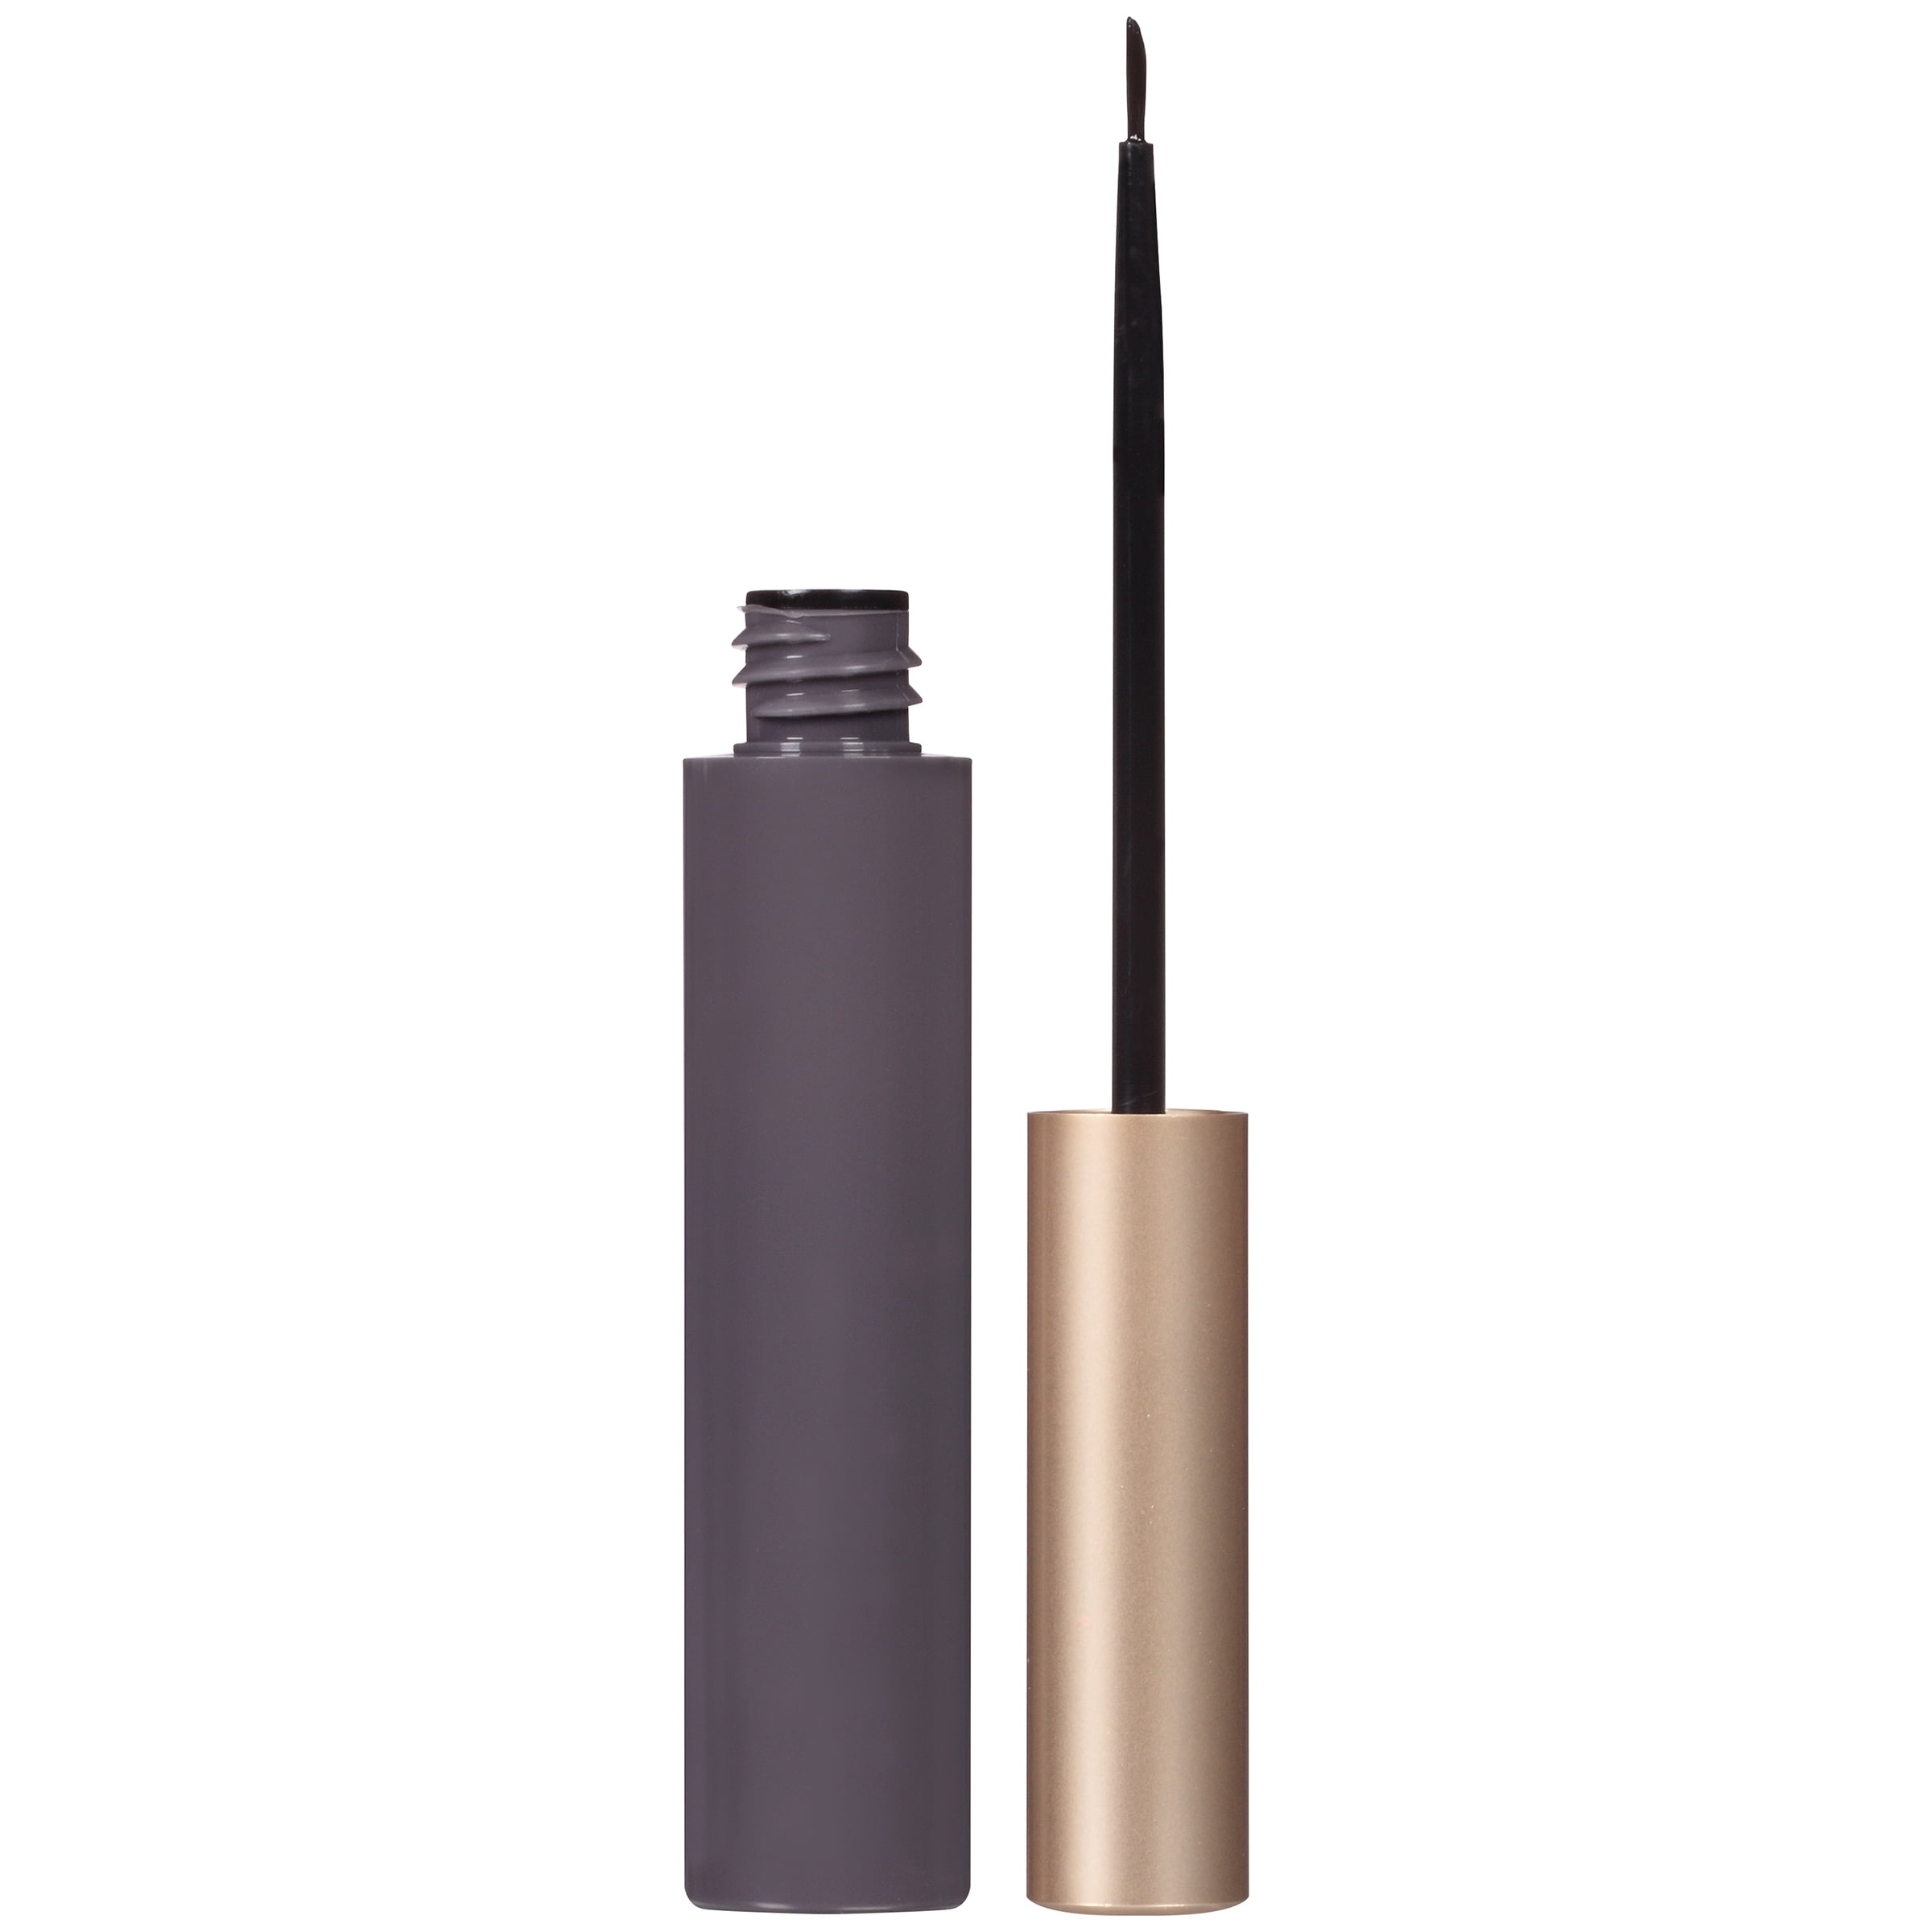 L'Oreal Paris Lineur Intense Brush Tip Liquid Eyeliner, Black, 0.24 fl